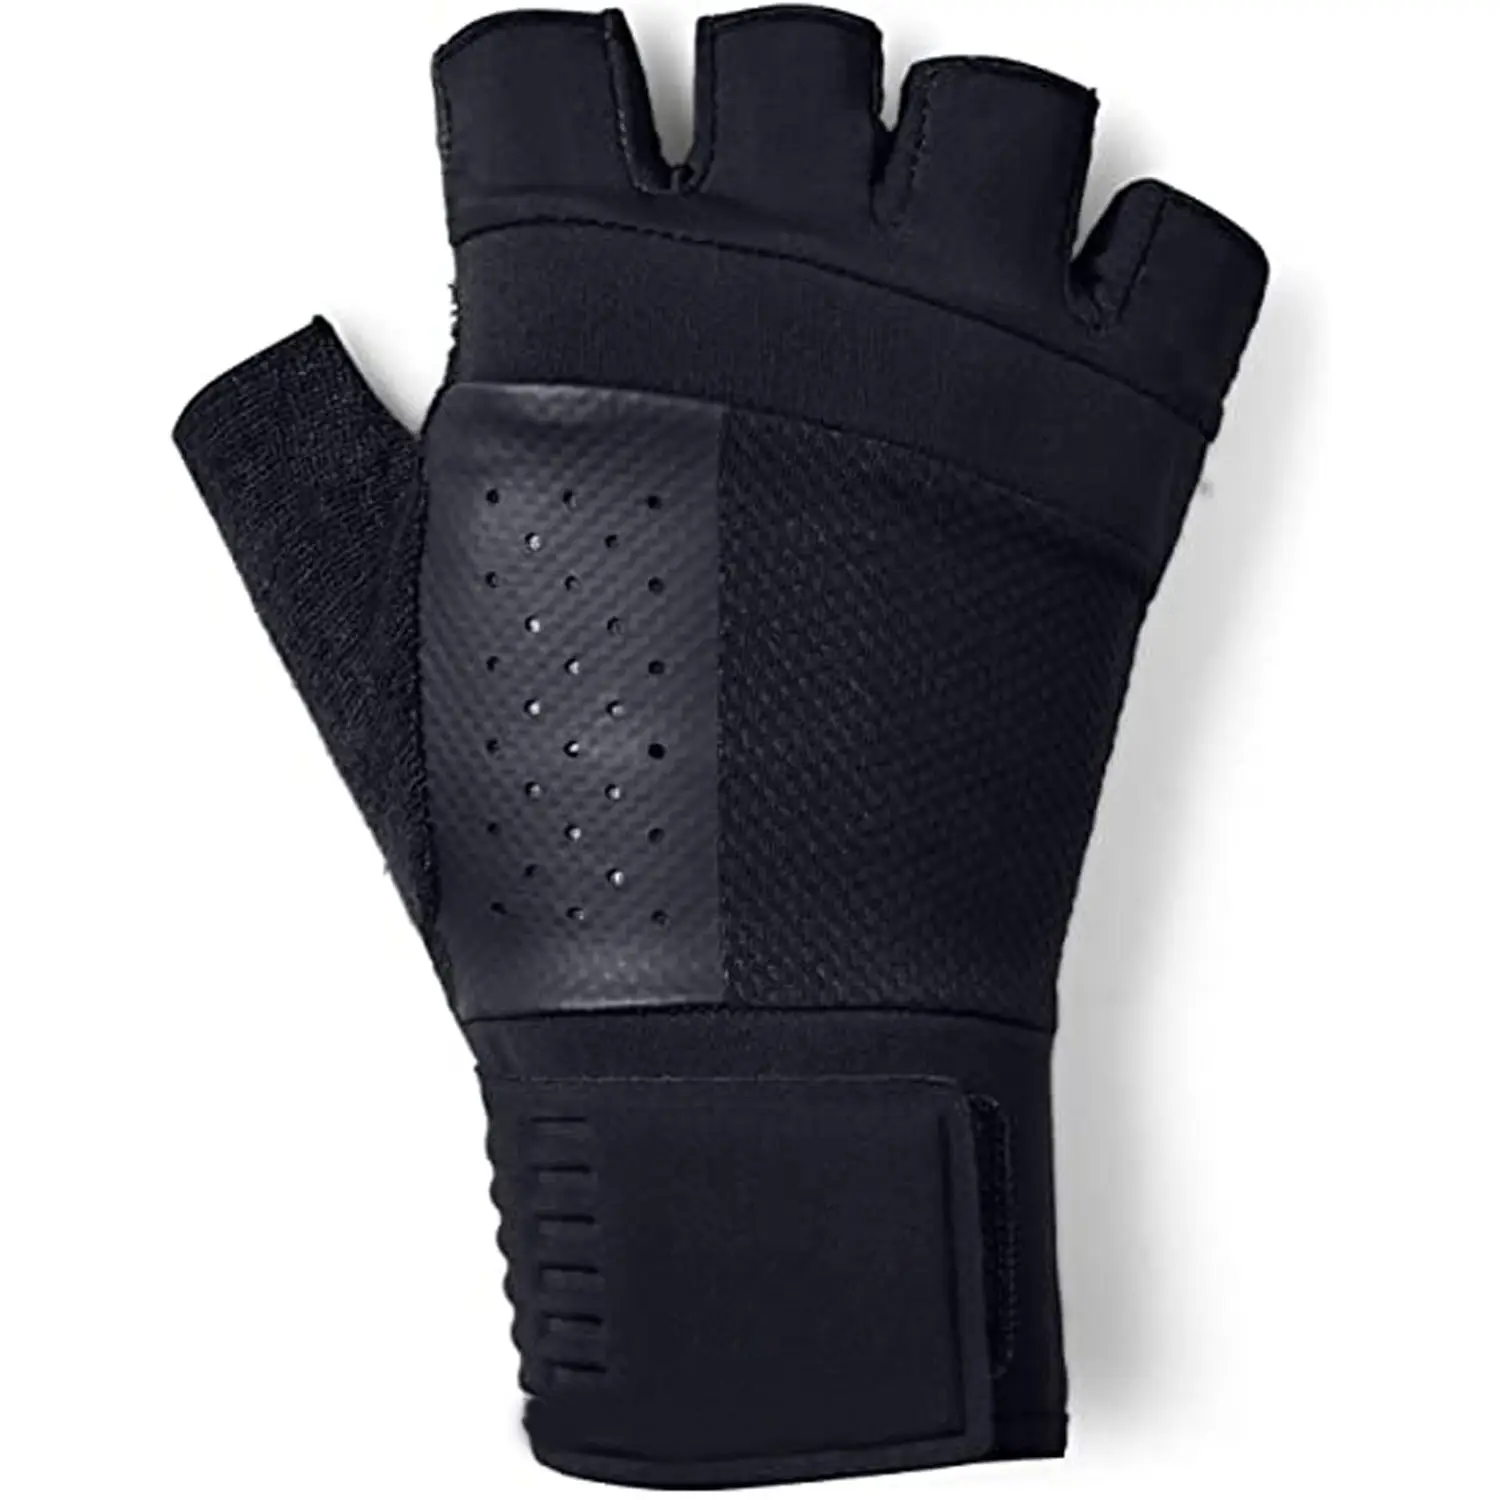 Gewichtheben rutsch feste Silikon Palm Handschuhe für Workout Handschutz Power Lifting Handschuhe Günstiger Preis